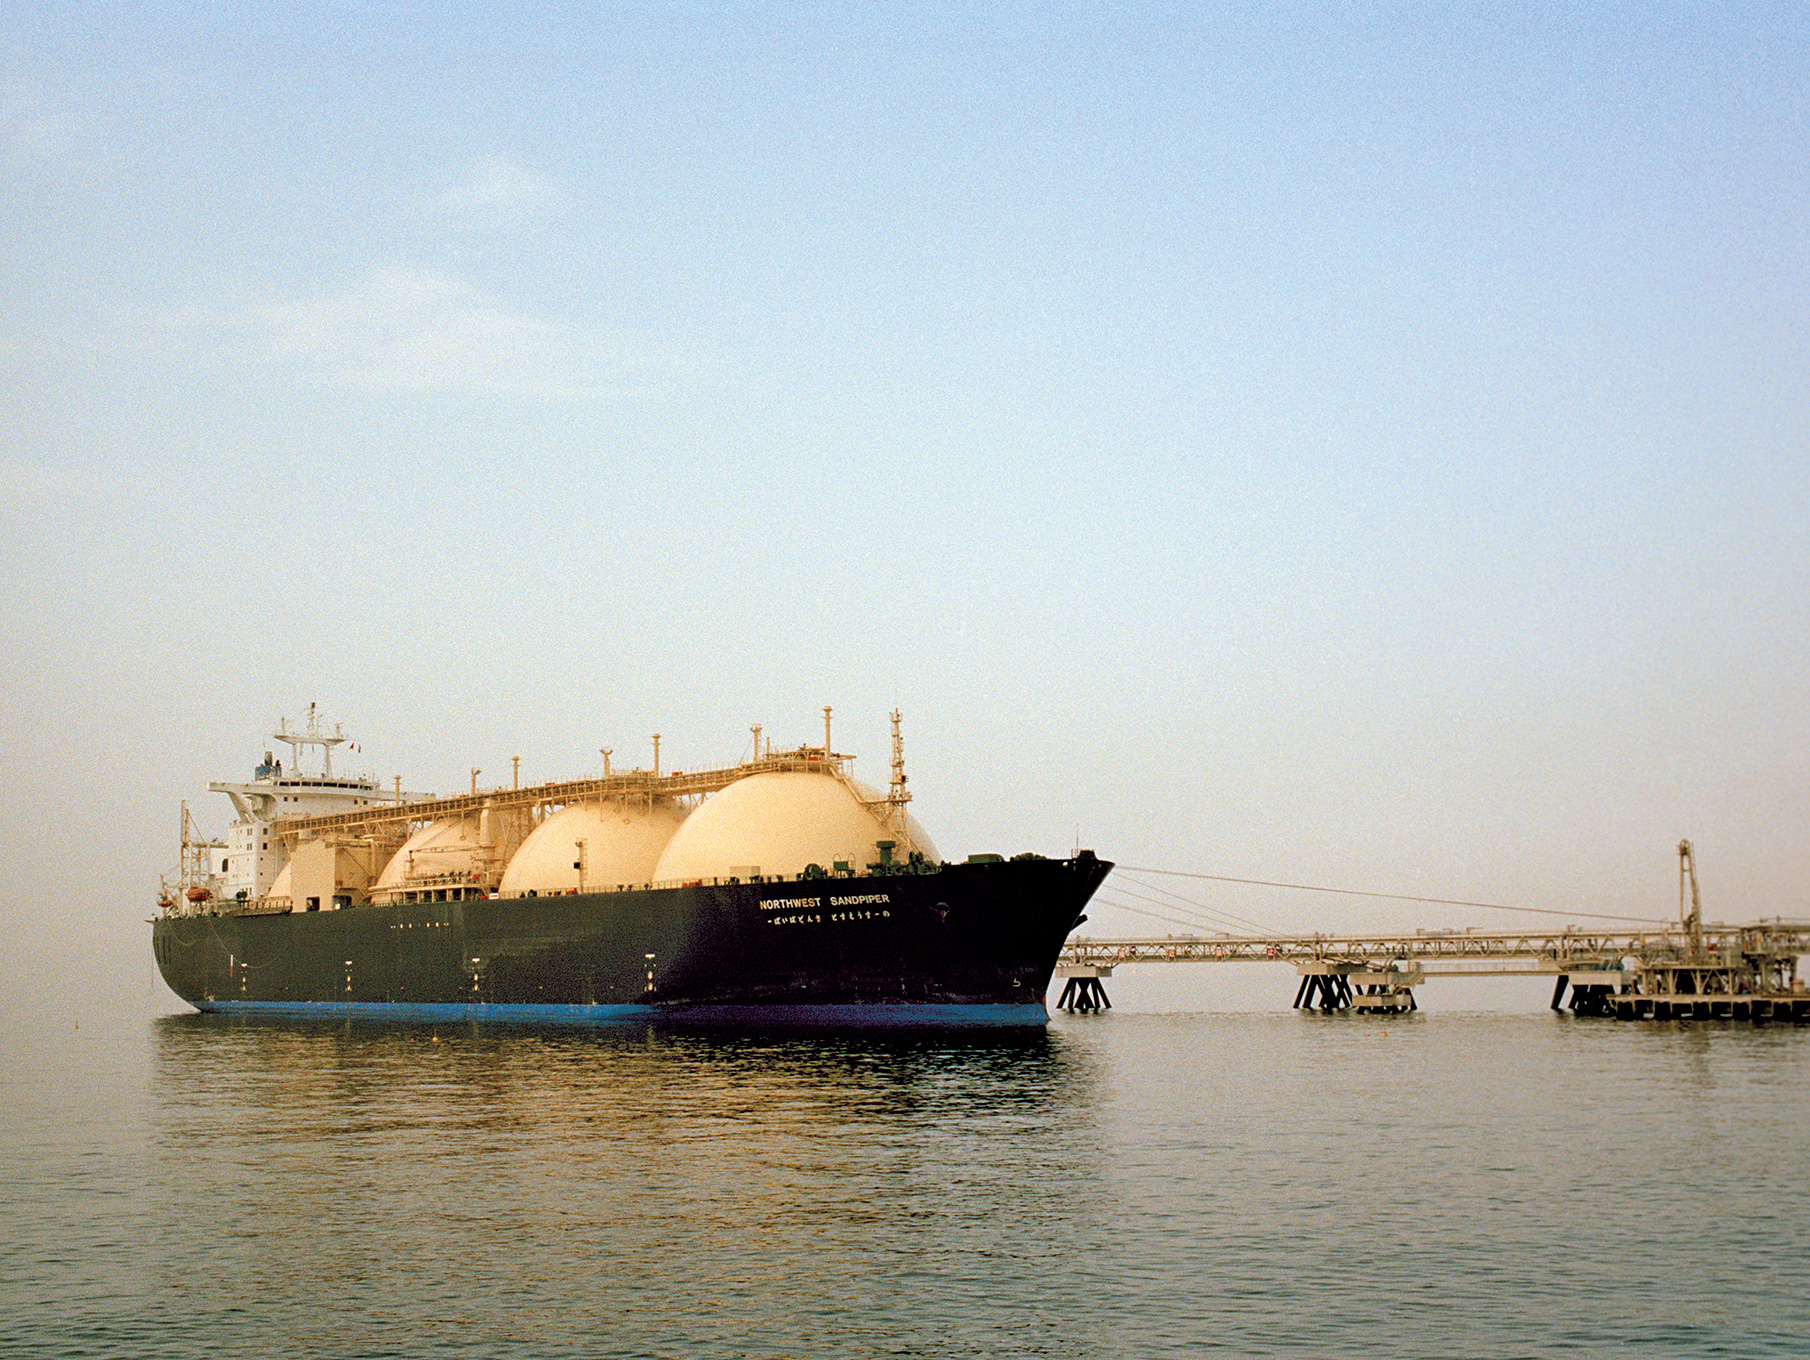   Gas vessel,  Kaizuka ward, 2010  